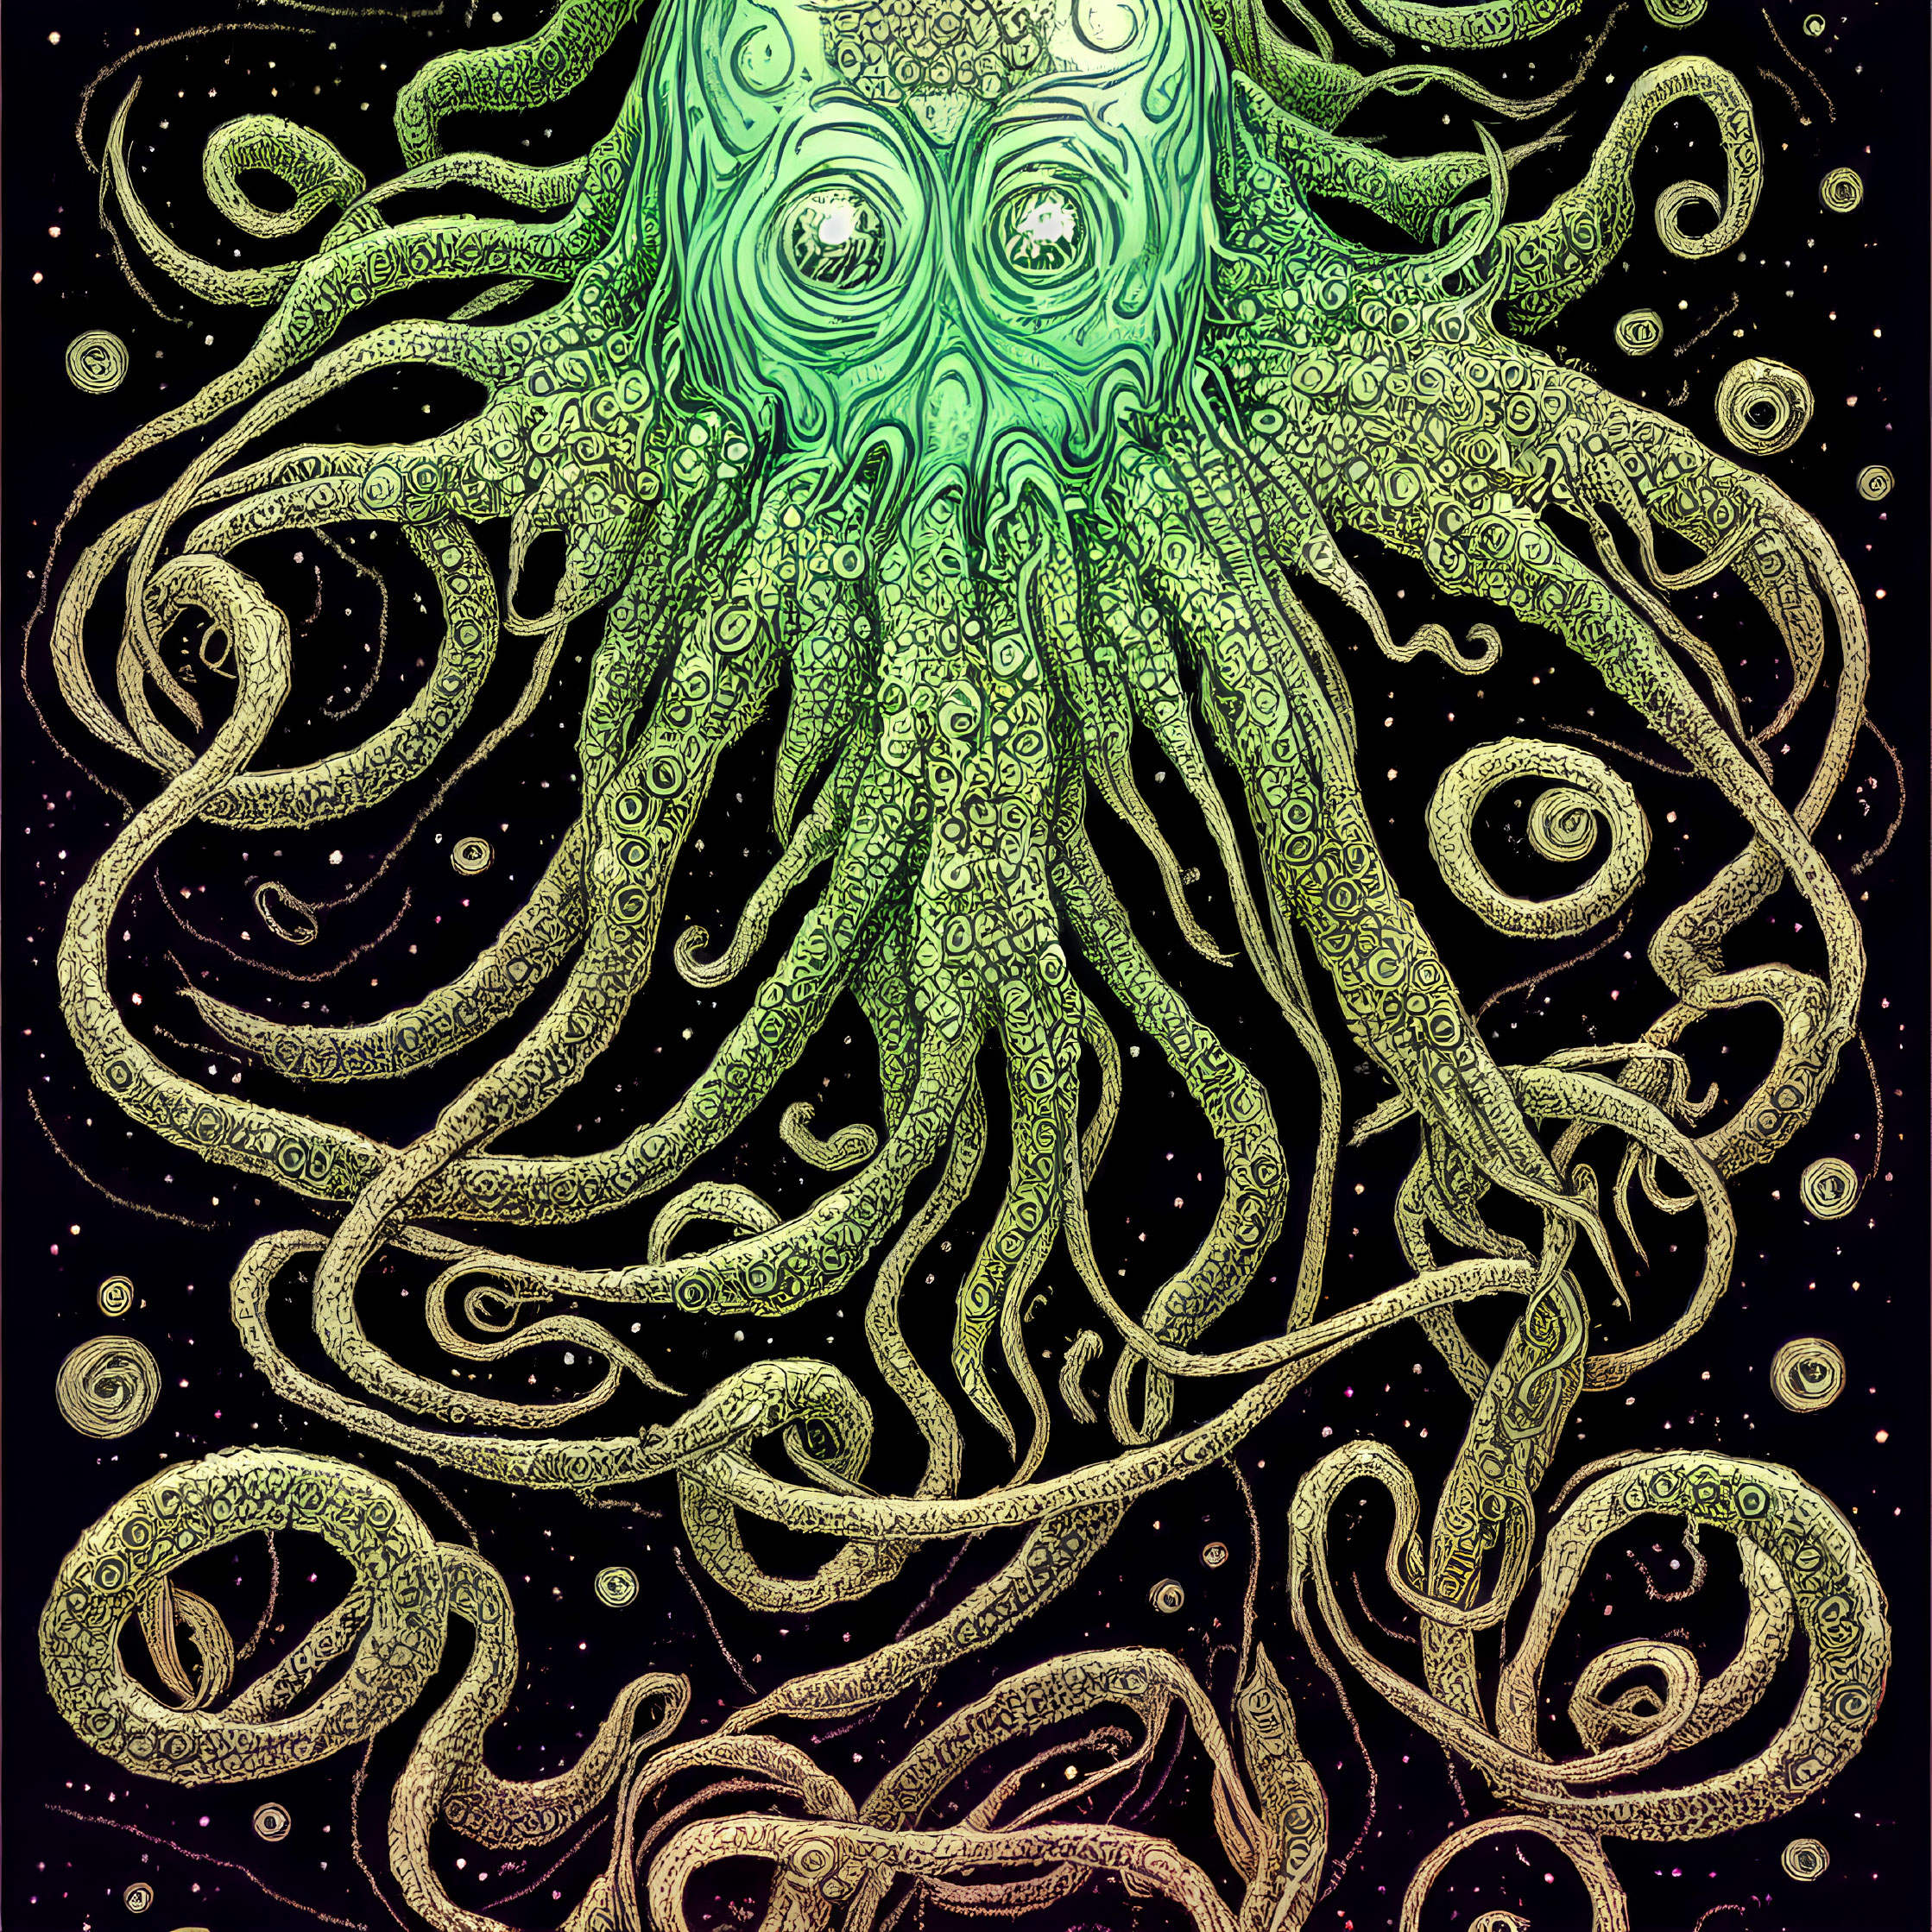 Detailed Green Octopus Illustration on Dark Starry Background